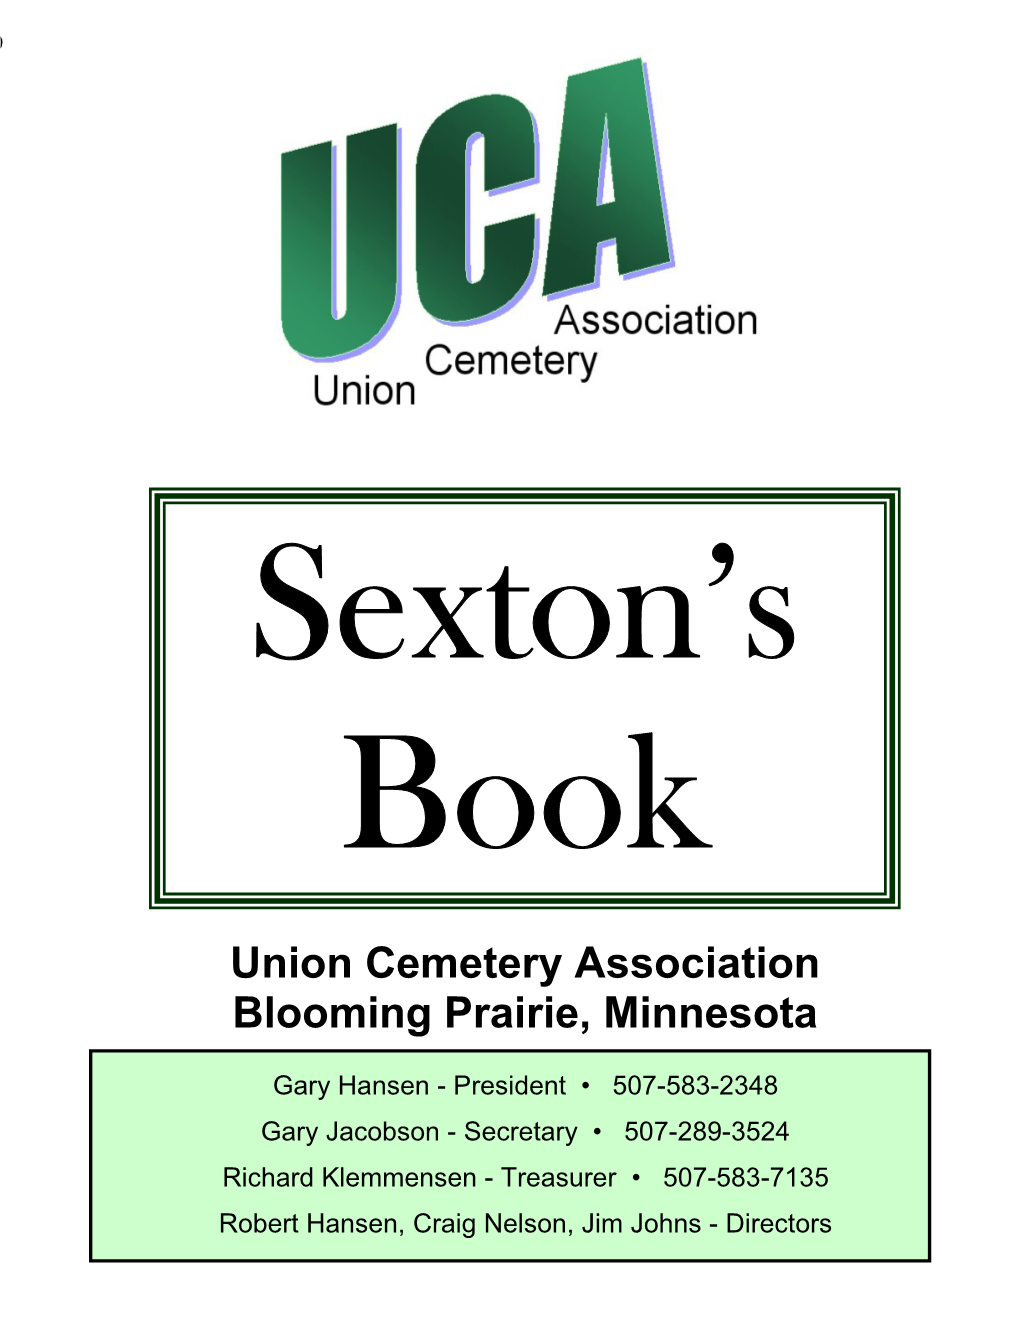 Union Cemetery Association Blooming Prairie, Minnesota